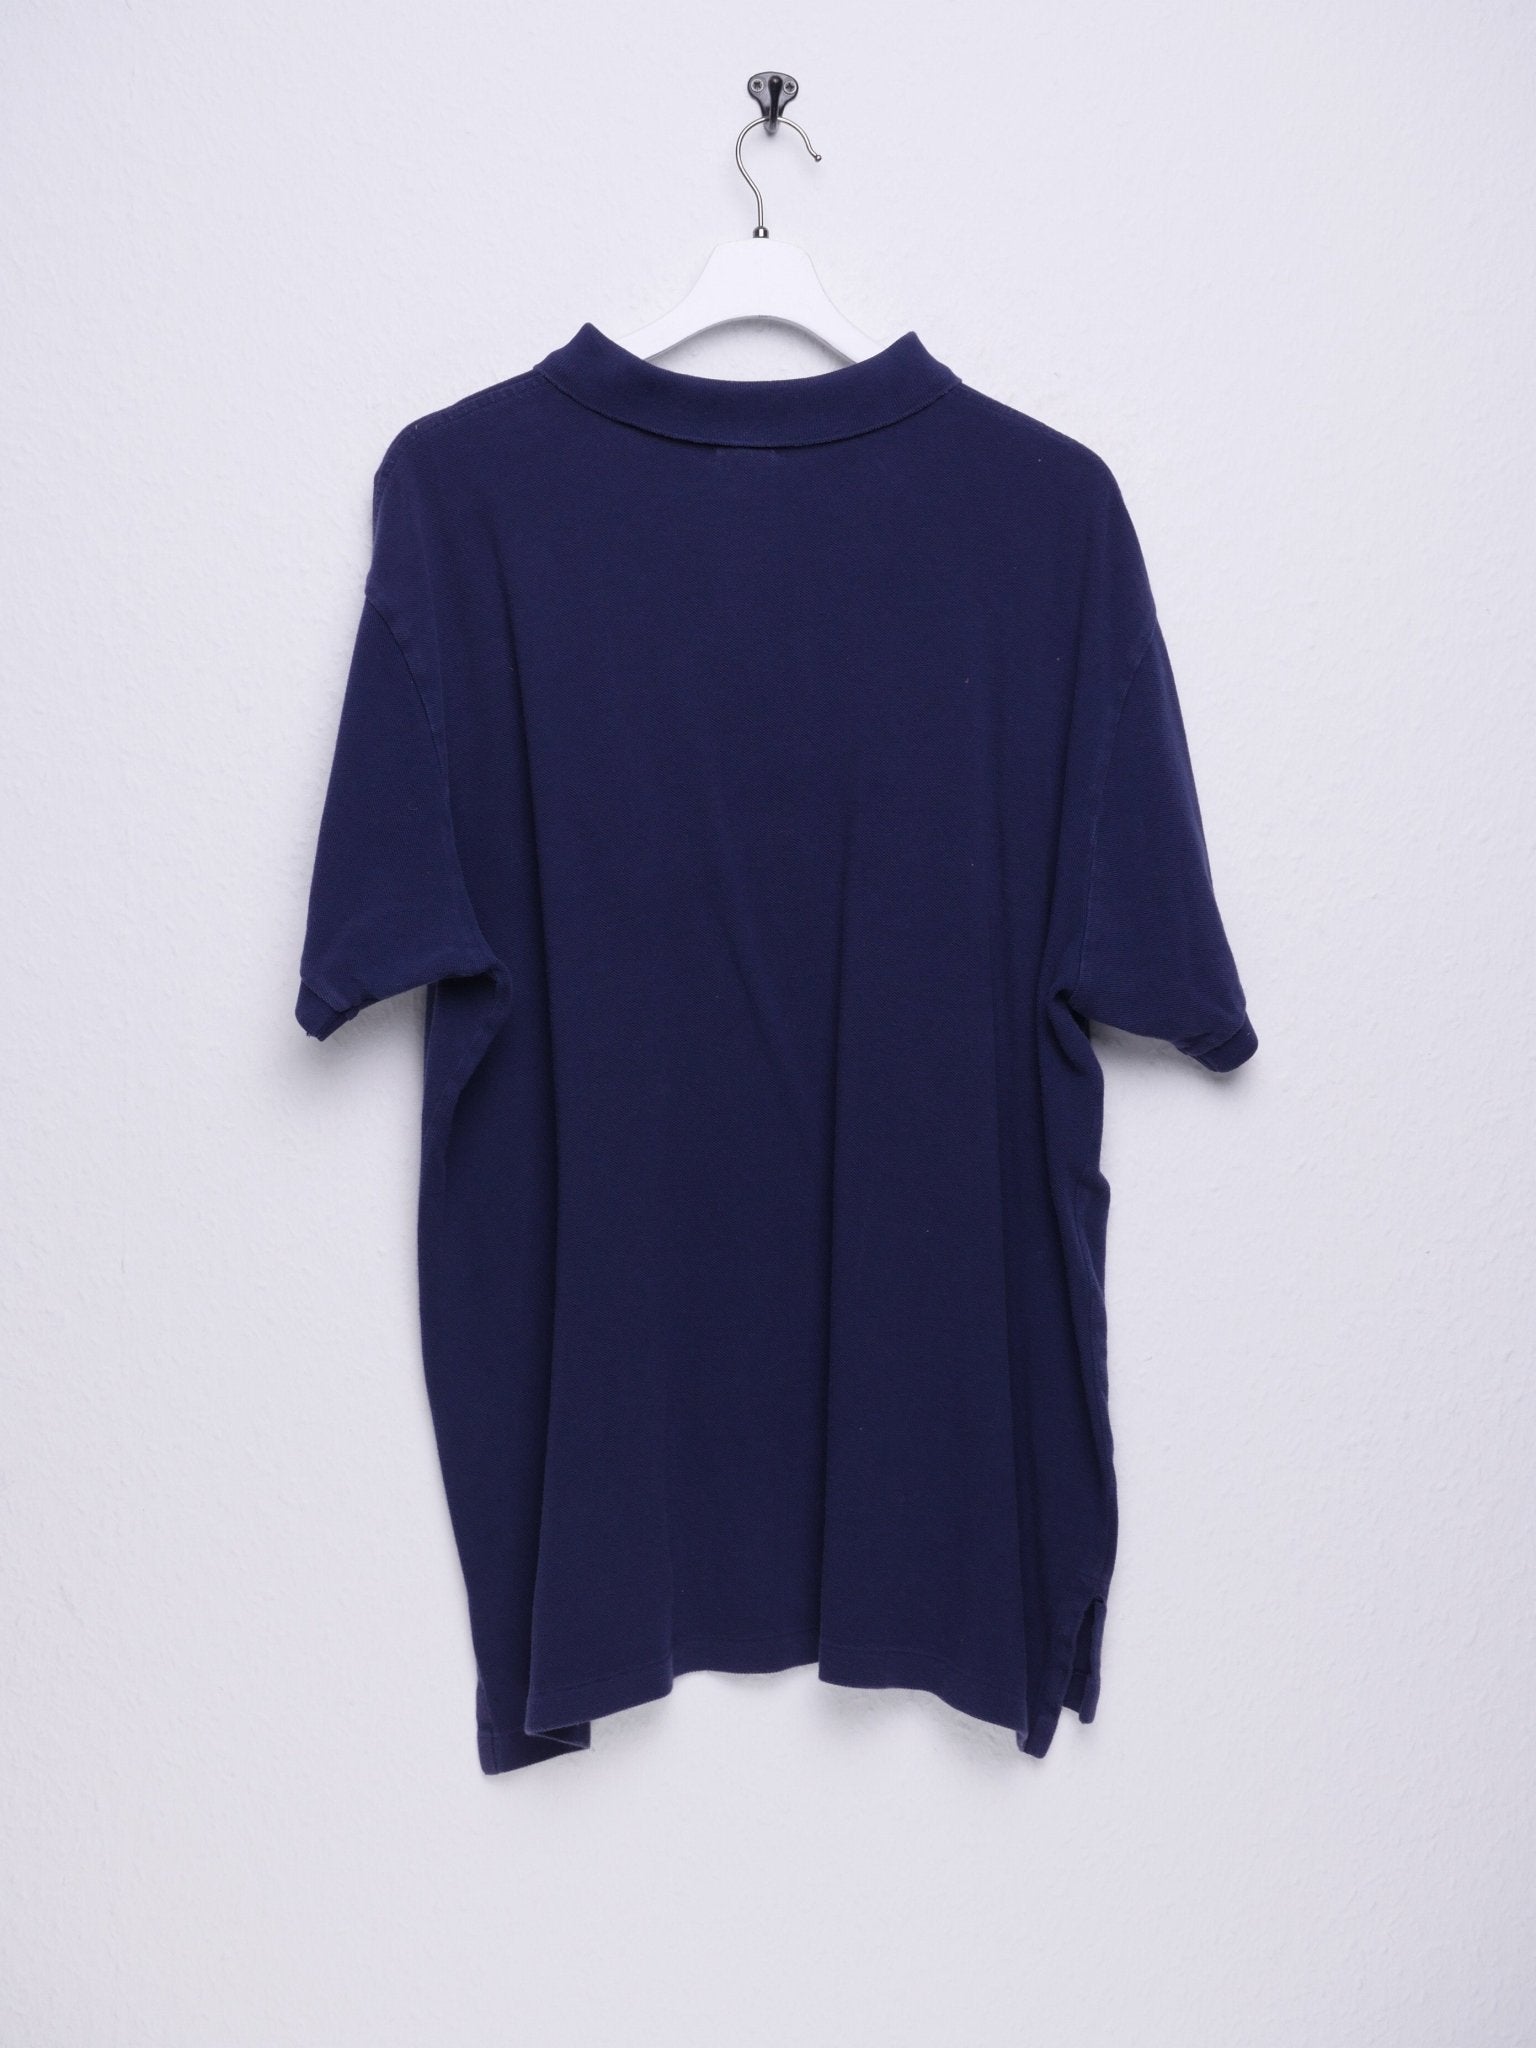 ralph lauren embroidered Logo dark blue Polo Shirt - Peeces